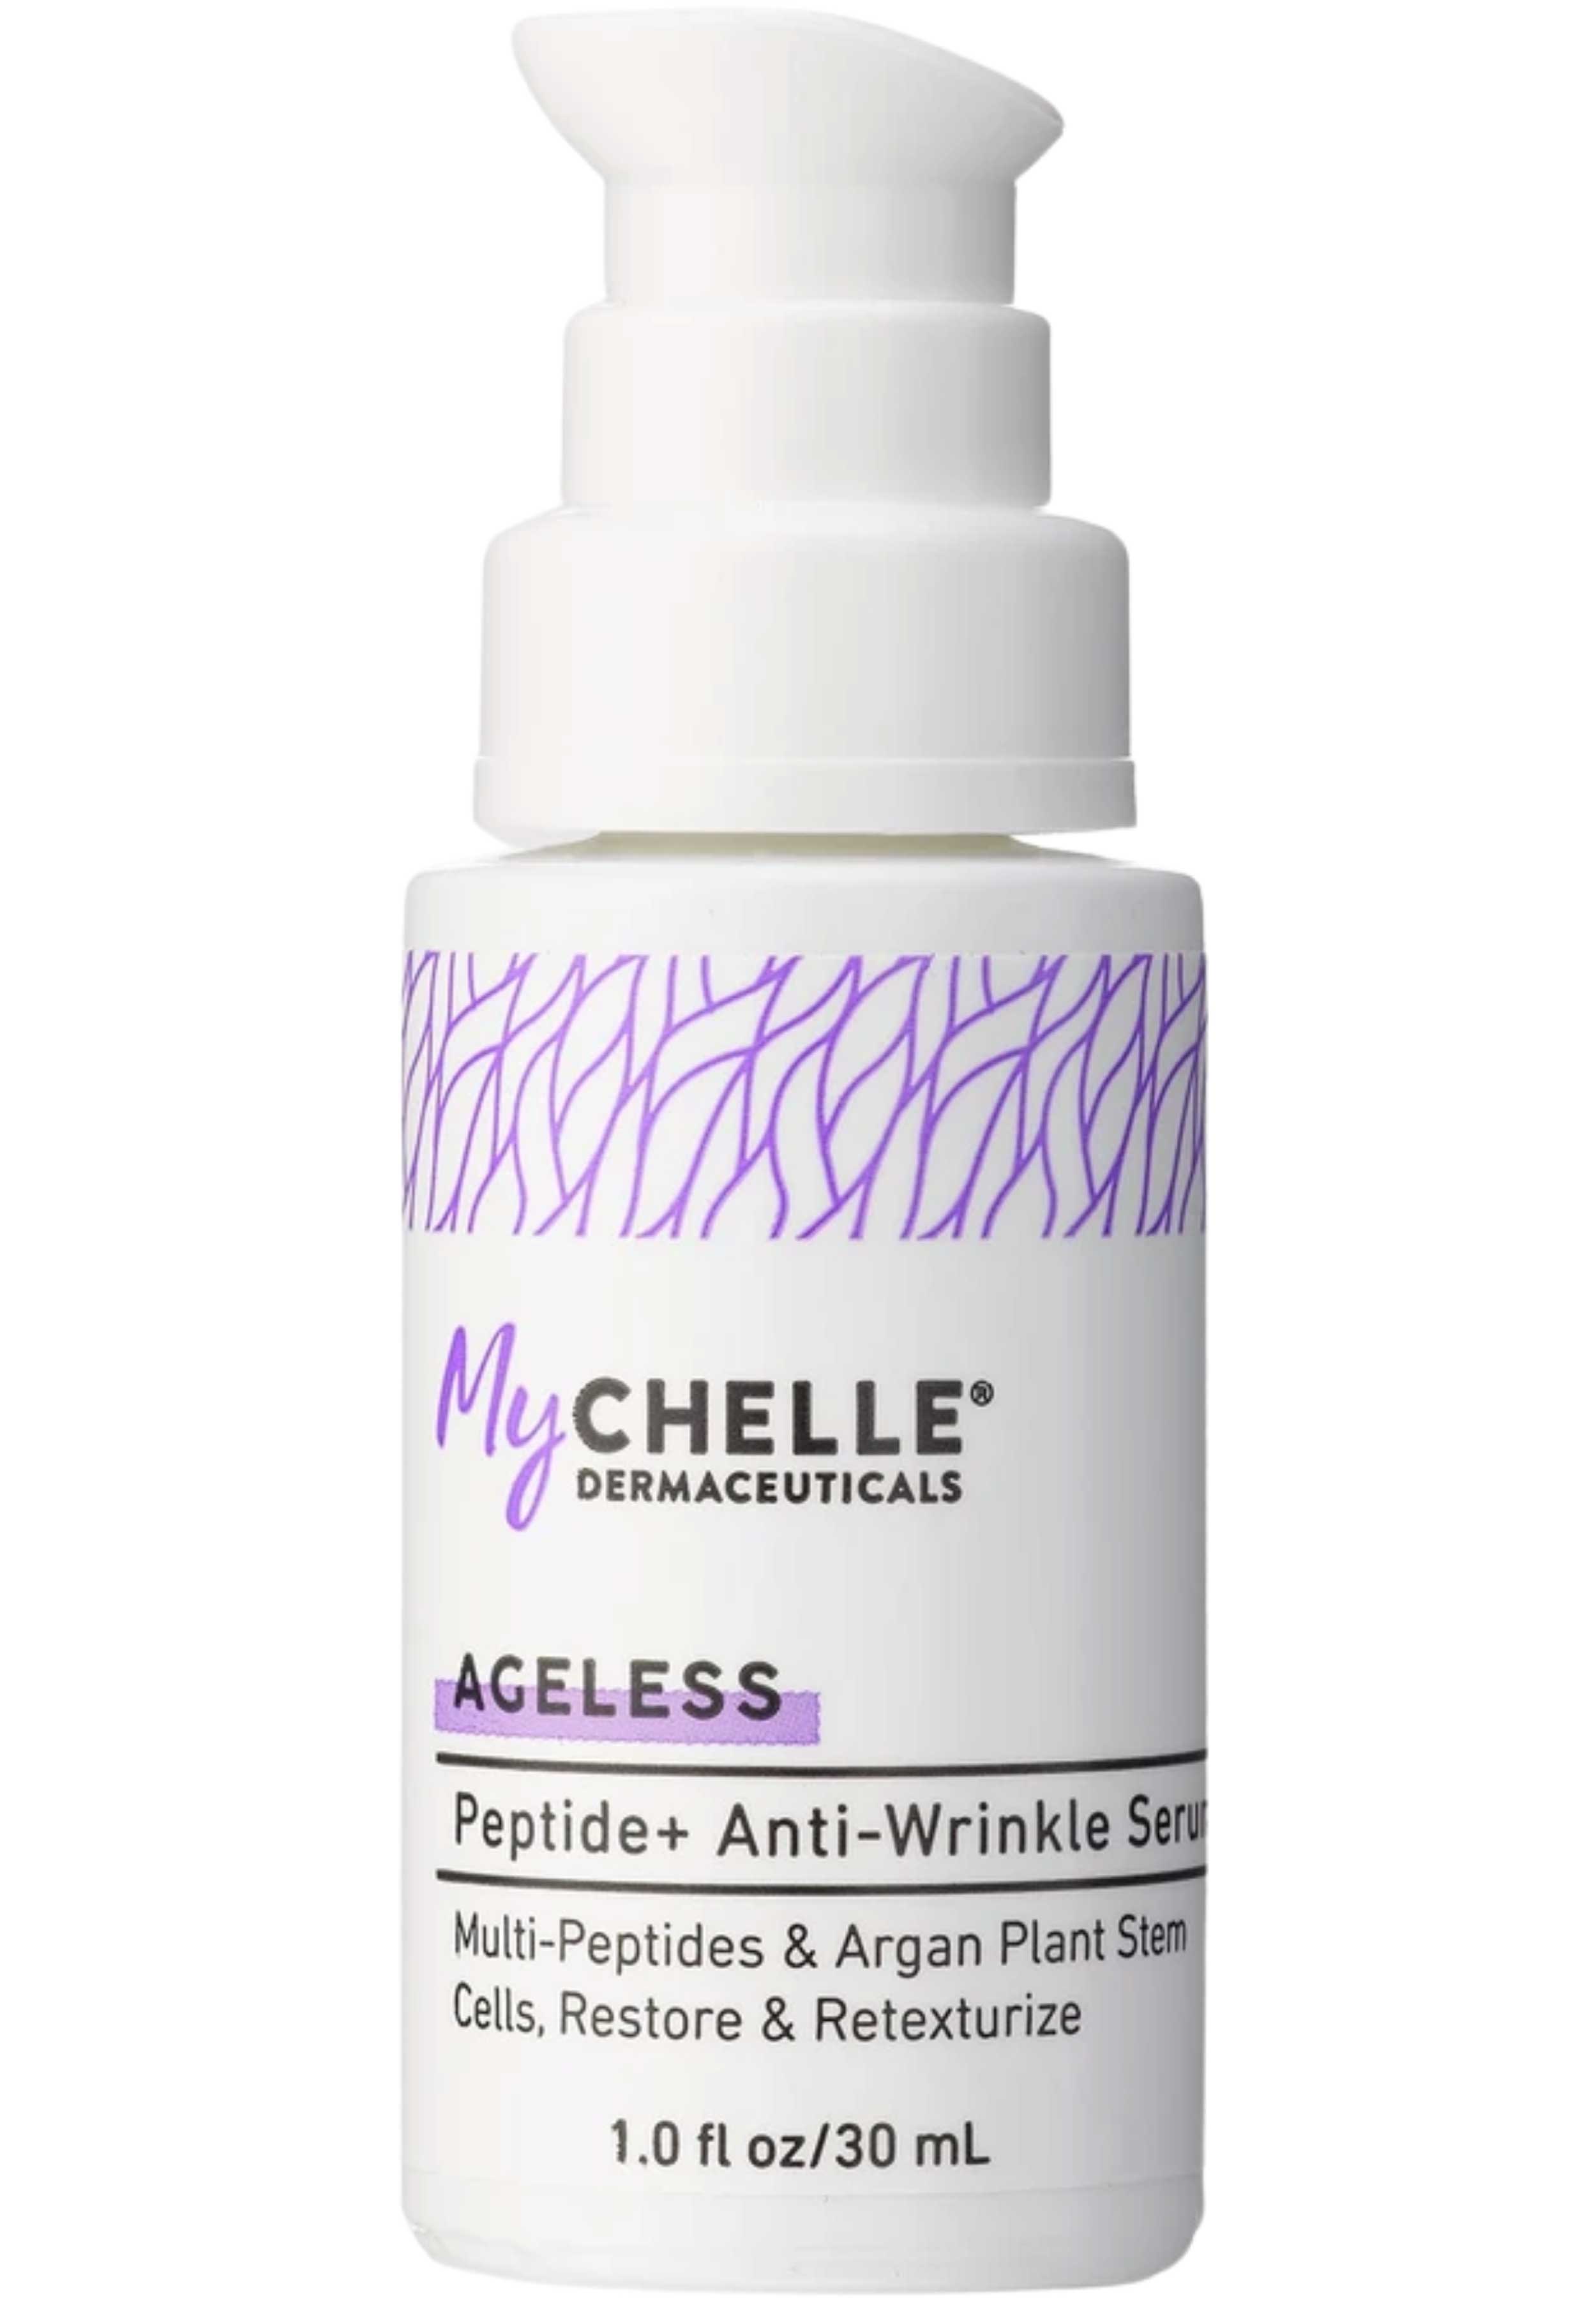 MyChelle Dermaceuticals Peptide+ Anti-Wrinkle Serum